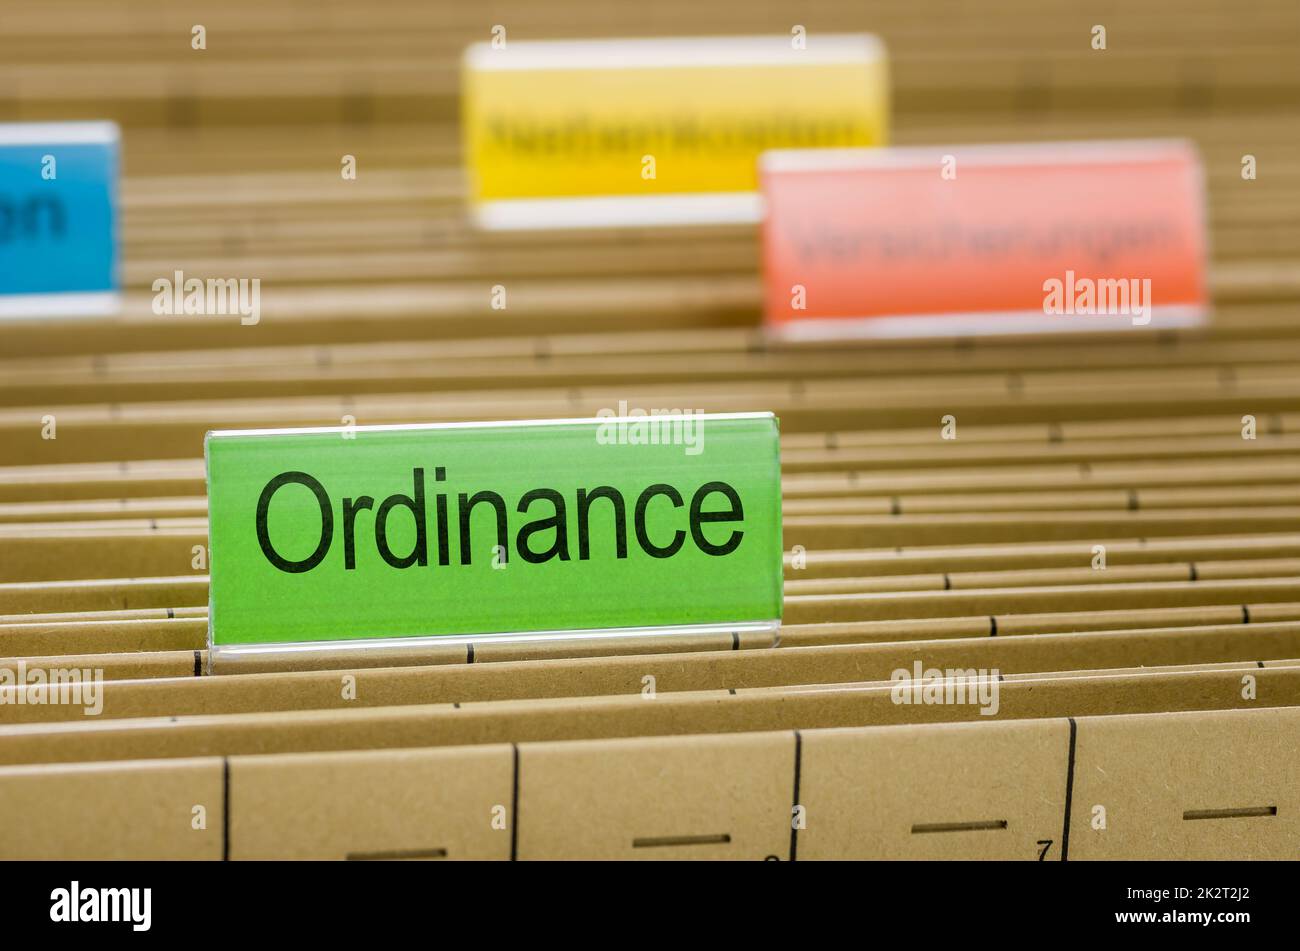 Hanging file folder labeled with Ordinance Stock Photo